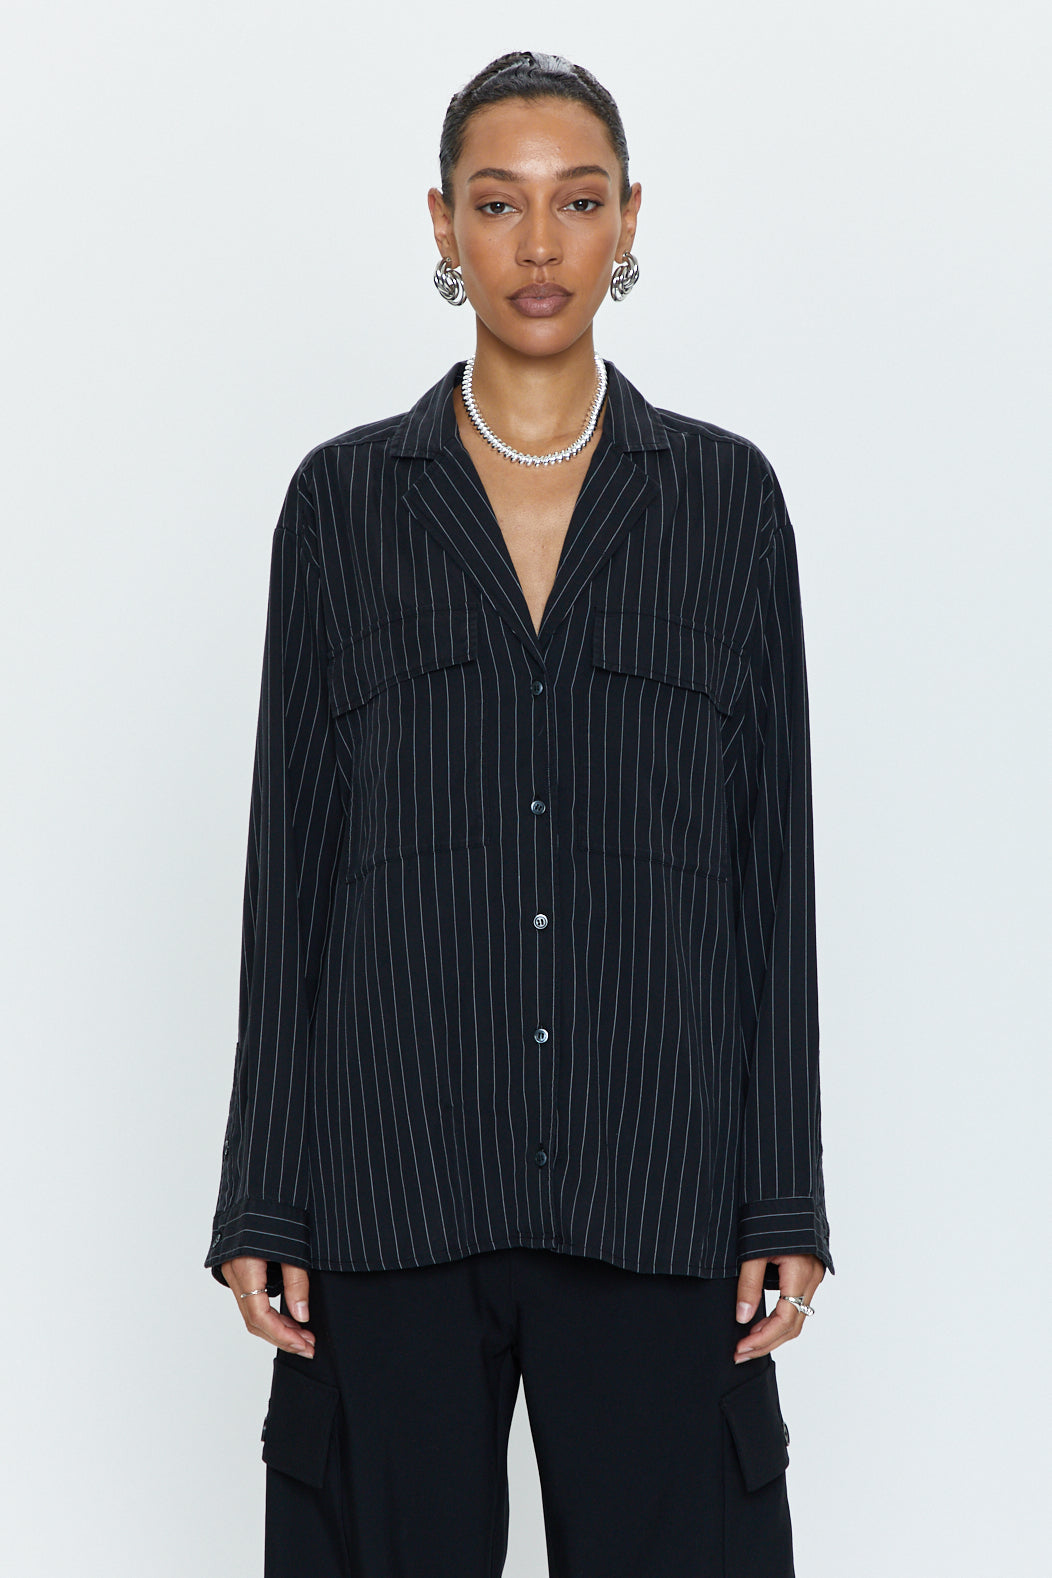 Irene Effortless Button Down Shirt - Black Pinstripe
            
              Sale